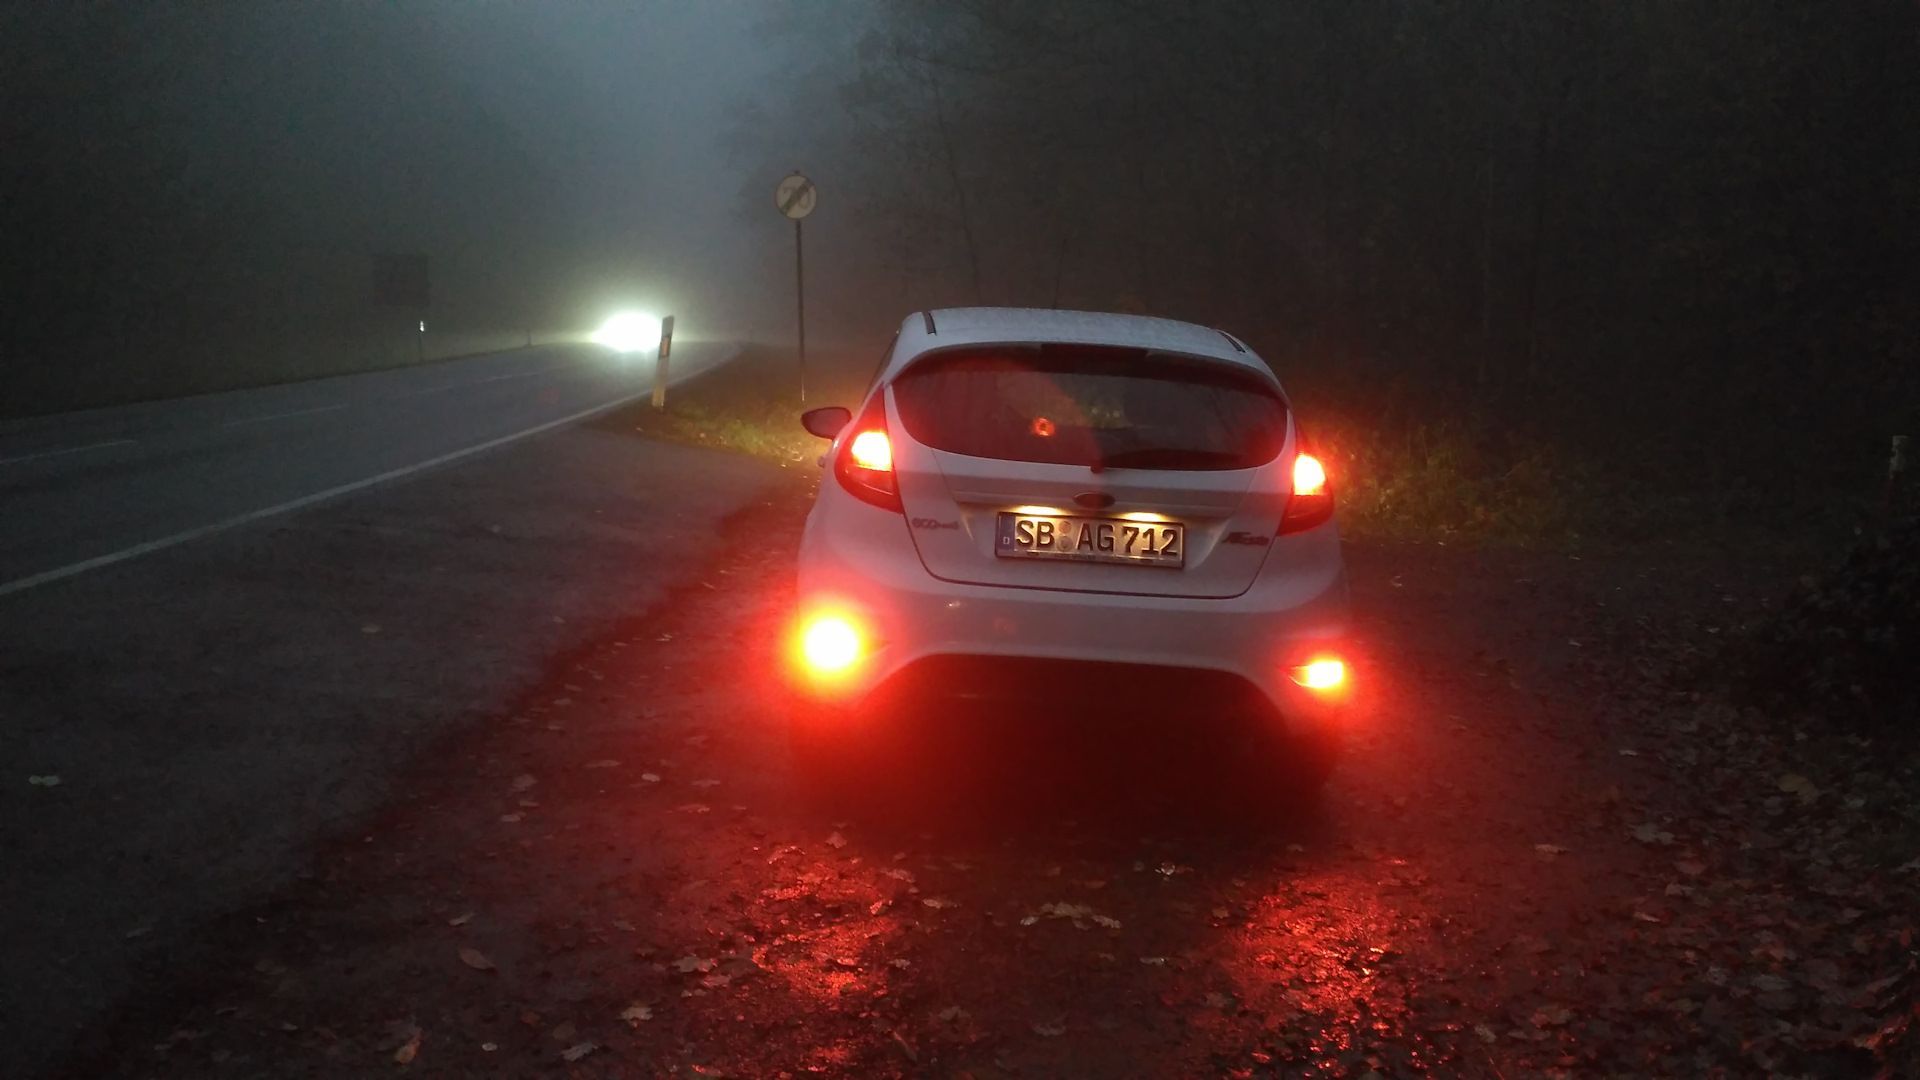 Задние противотуманные фары можно. Ford Fiesta противотуманки задние. Задняя противотуманная фара в тумане Солярис. Свет противотуманных фар Джентра 2013. Противотуманныйый фонари на машине.